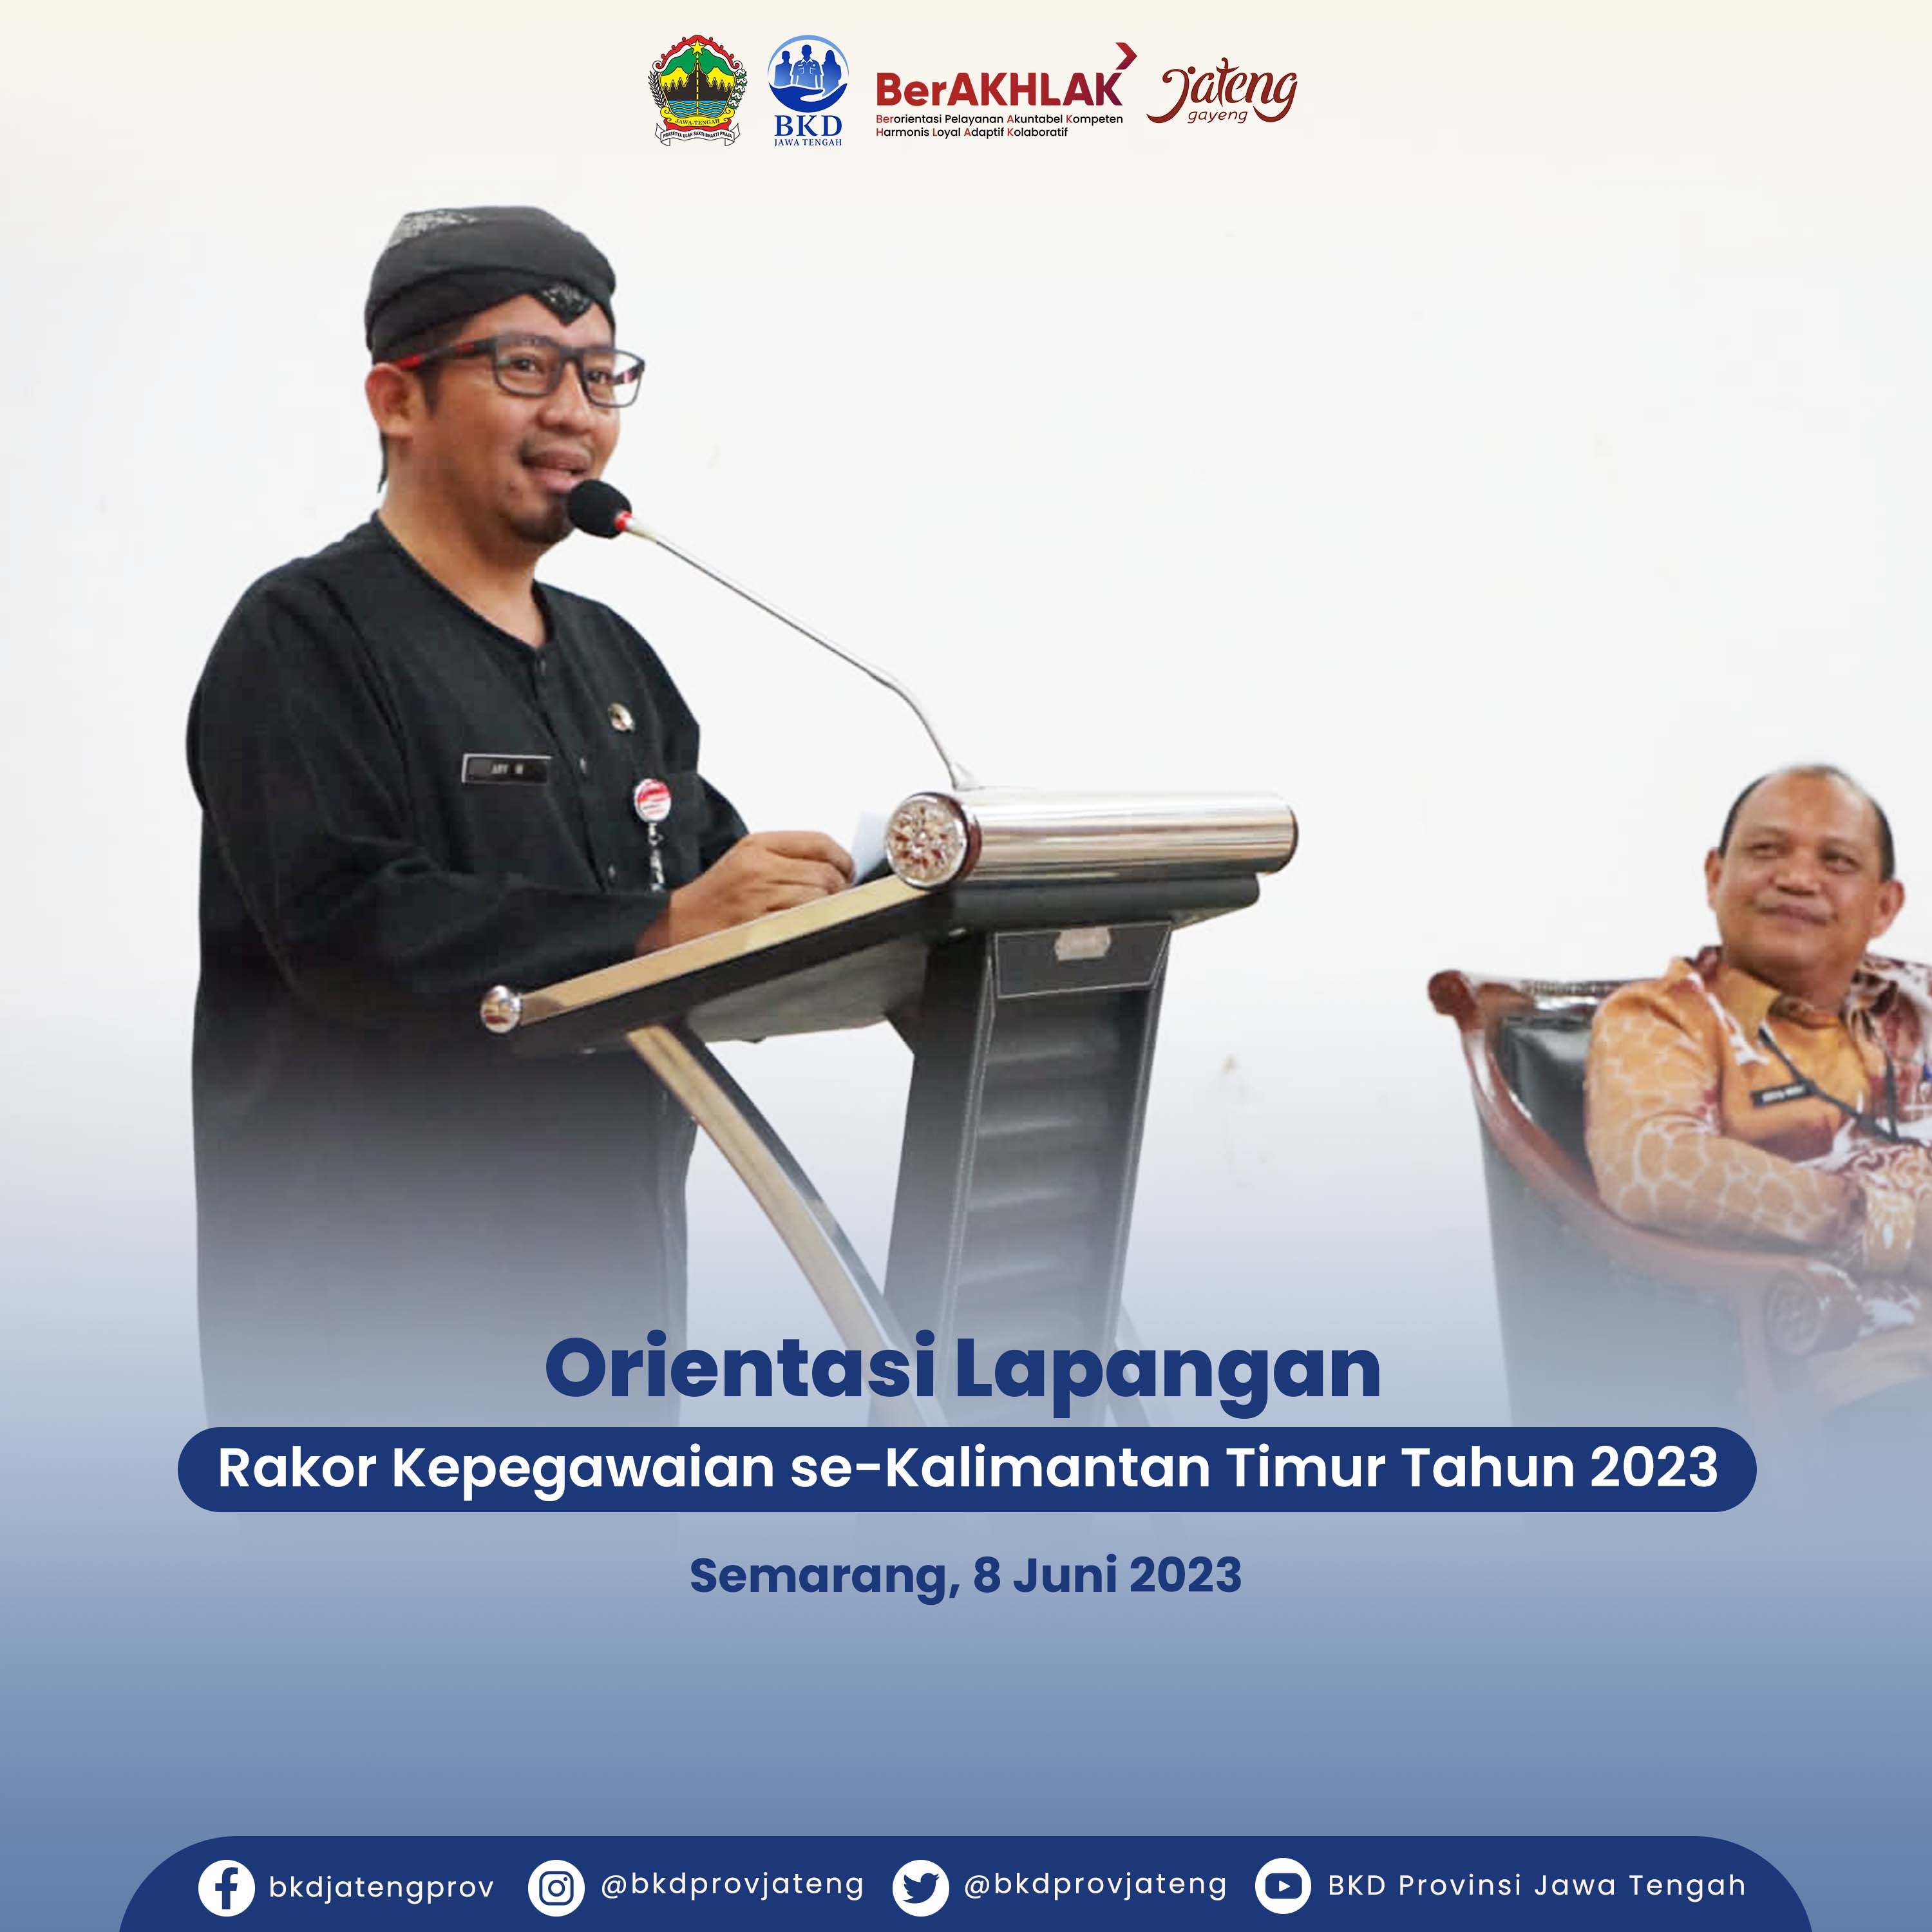 Provinsi Jawa Tengah ditunjuk sebagai lokus Orientasi Lapangan Rapat Koordinasi Kepegawaian se-Kalimantan Timur Tahun 2023